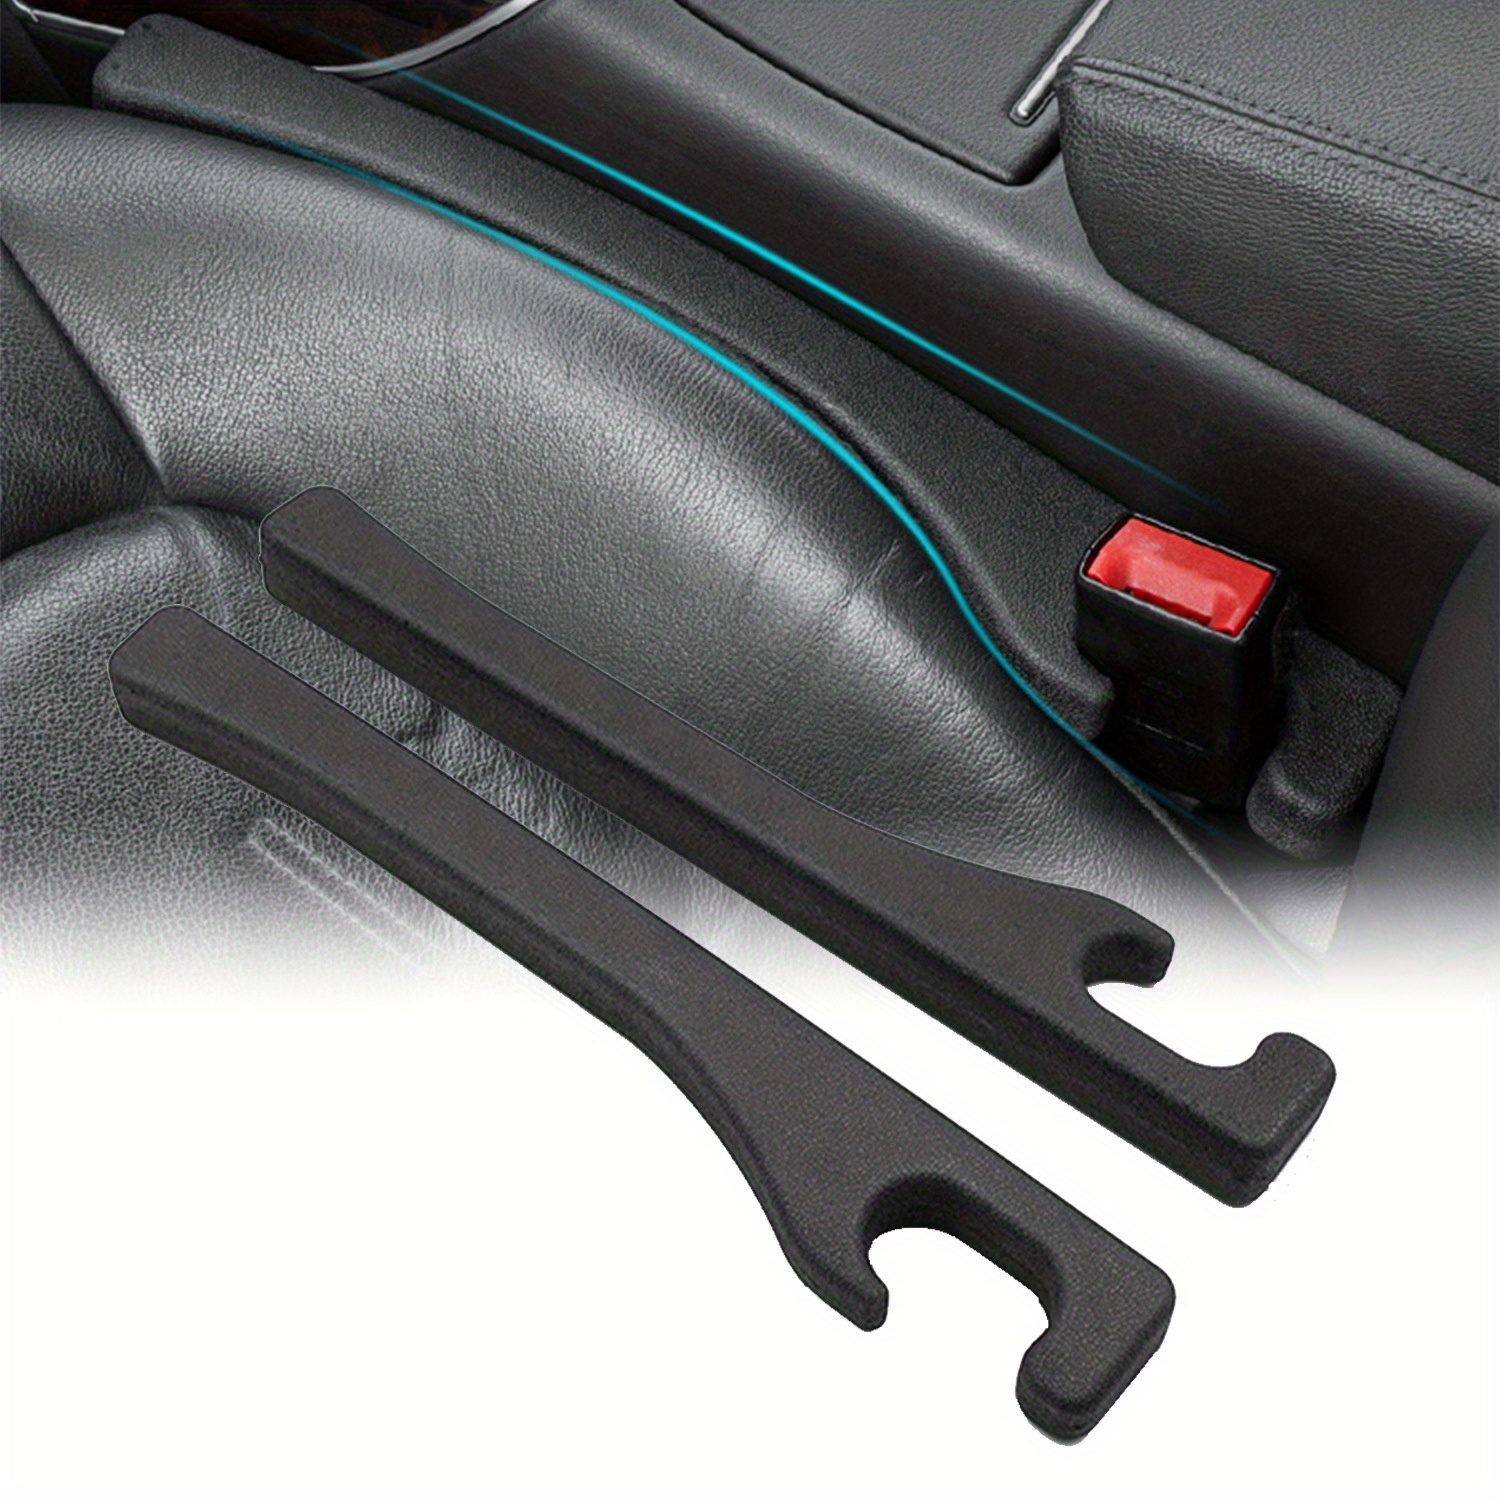 Fall Arrest, Universal Car Seat Gap Filler Pad, Interior Car Accessories  (Ideal for Audi, BMW, Benz). (2pcs) 